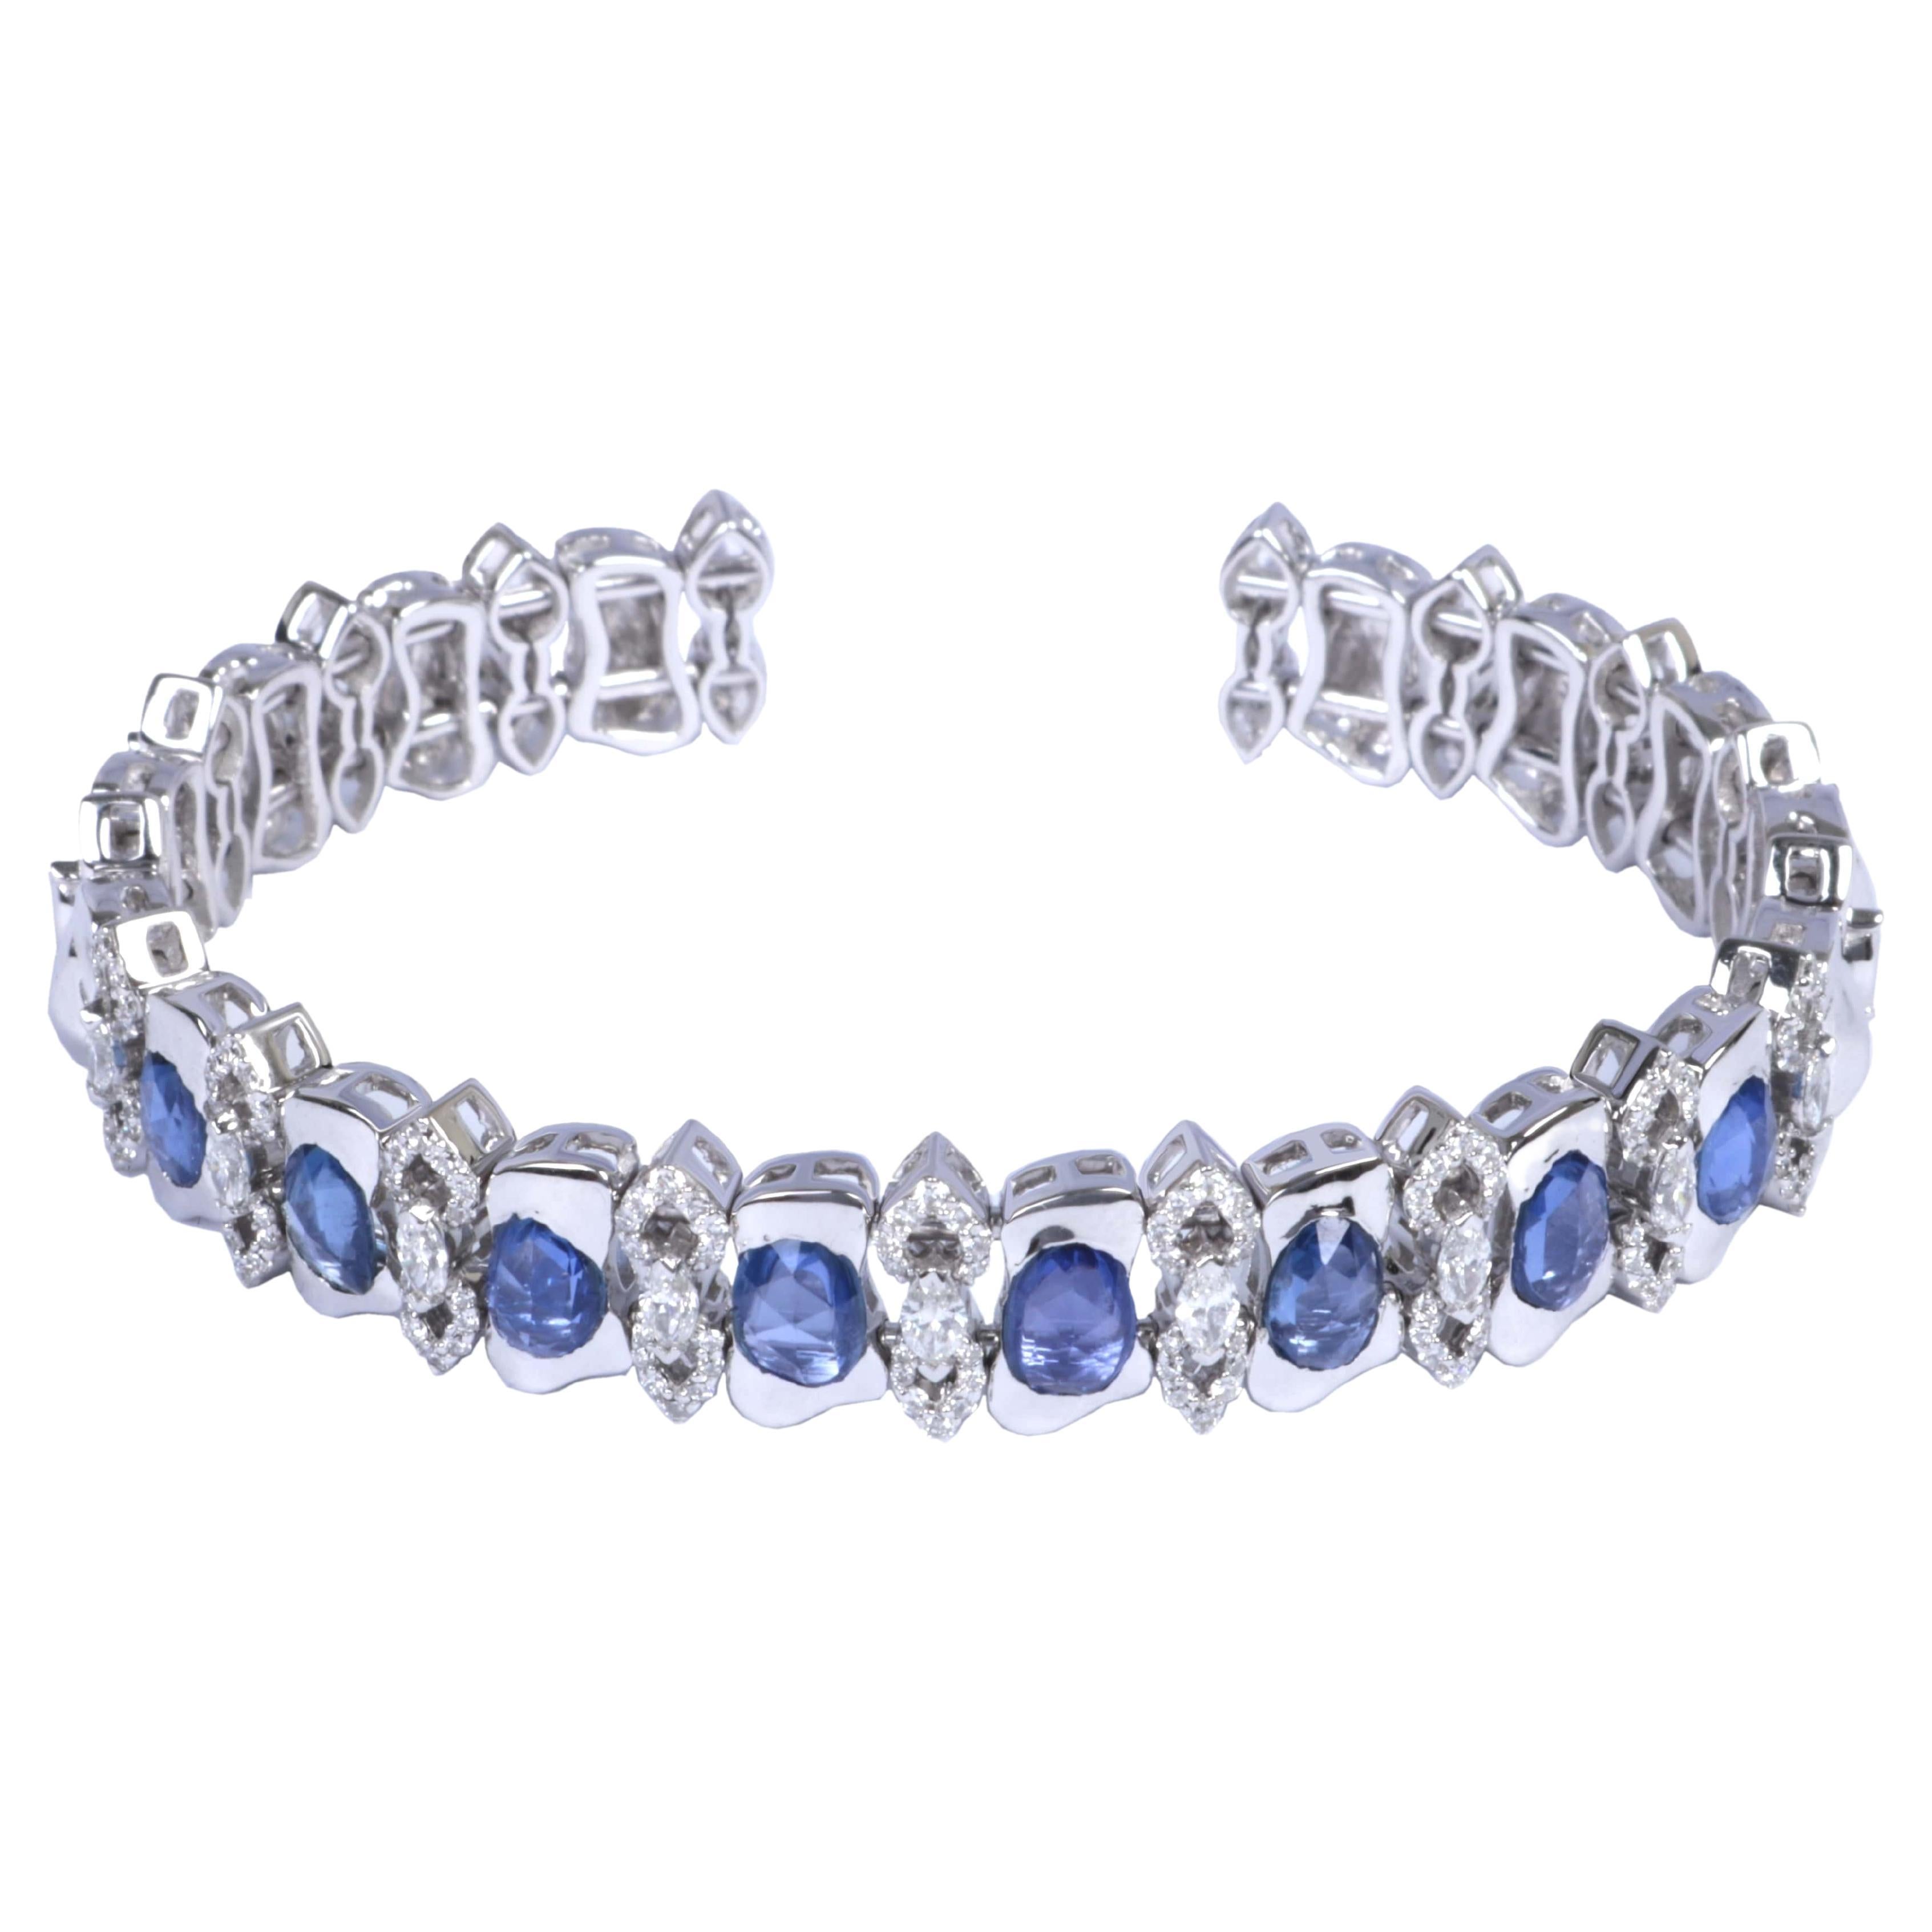 18 Karat White Gold Arabesque Bracelet with Blue Sapphires